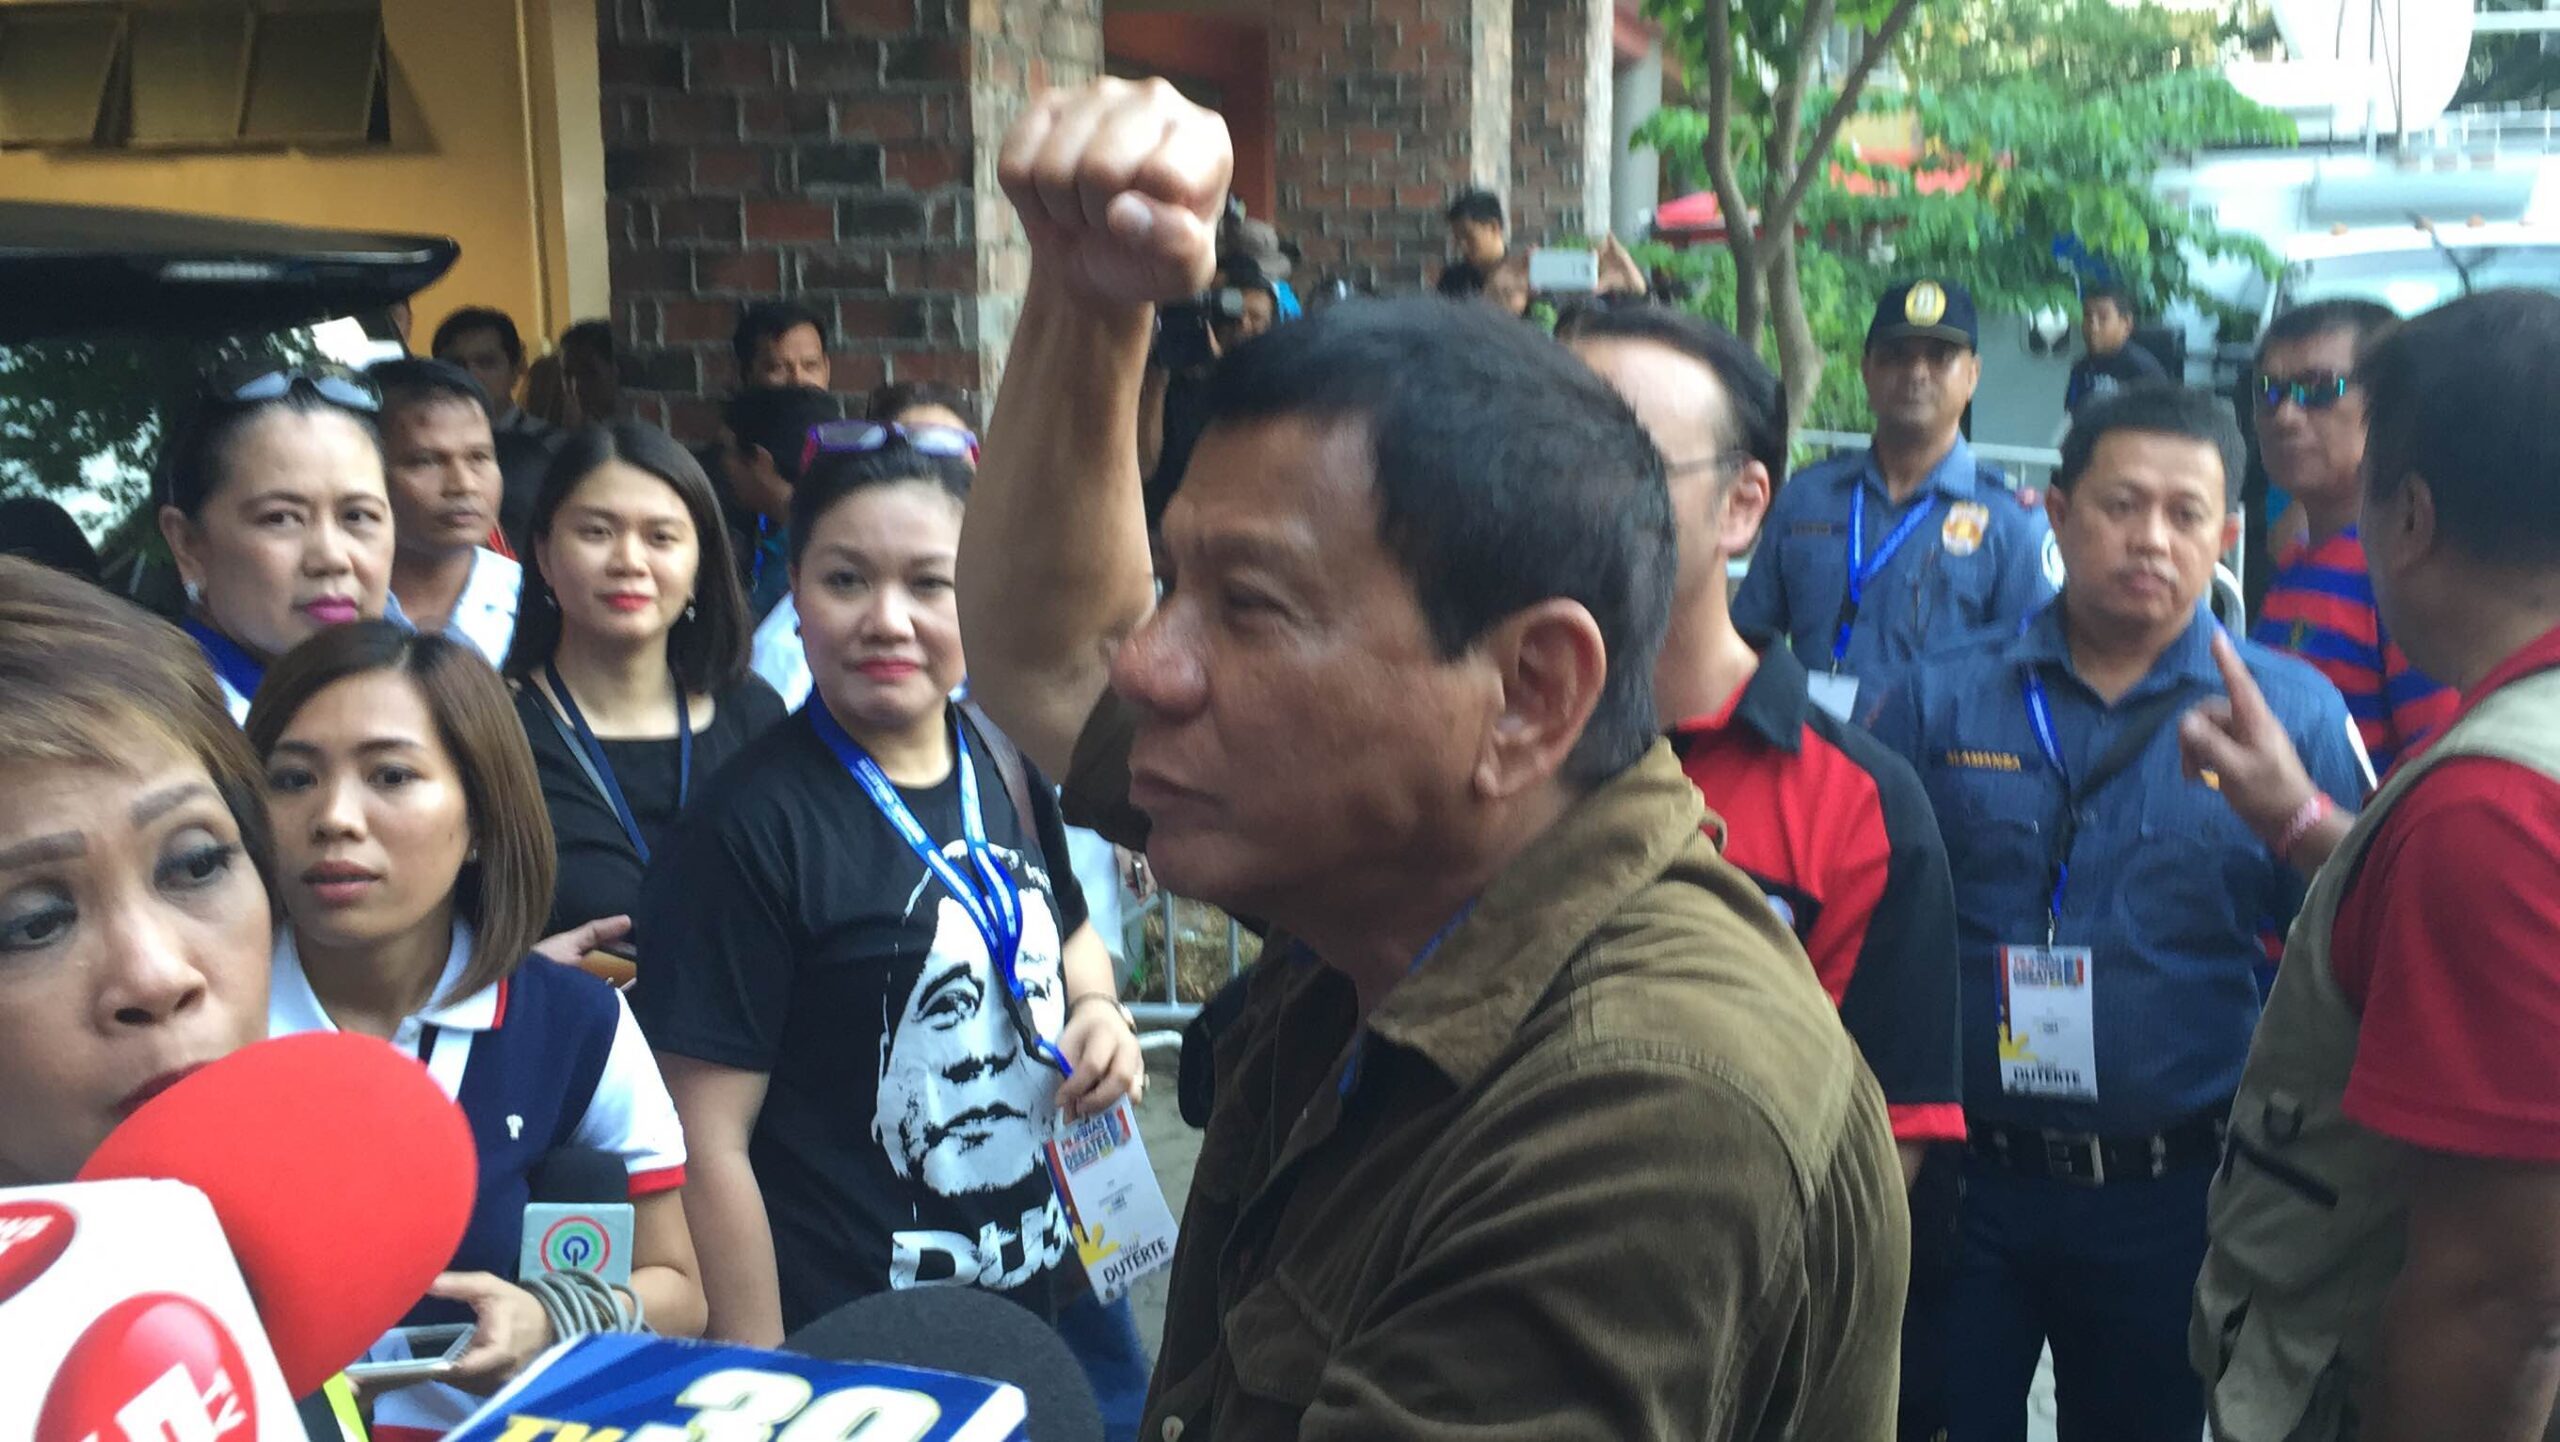 Duterte in 3rd presidential debate: More serious, cautious